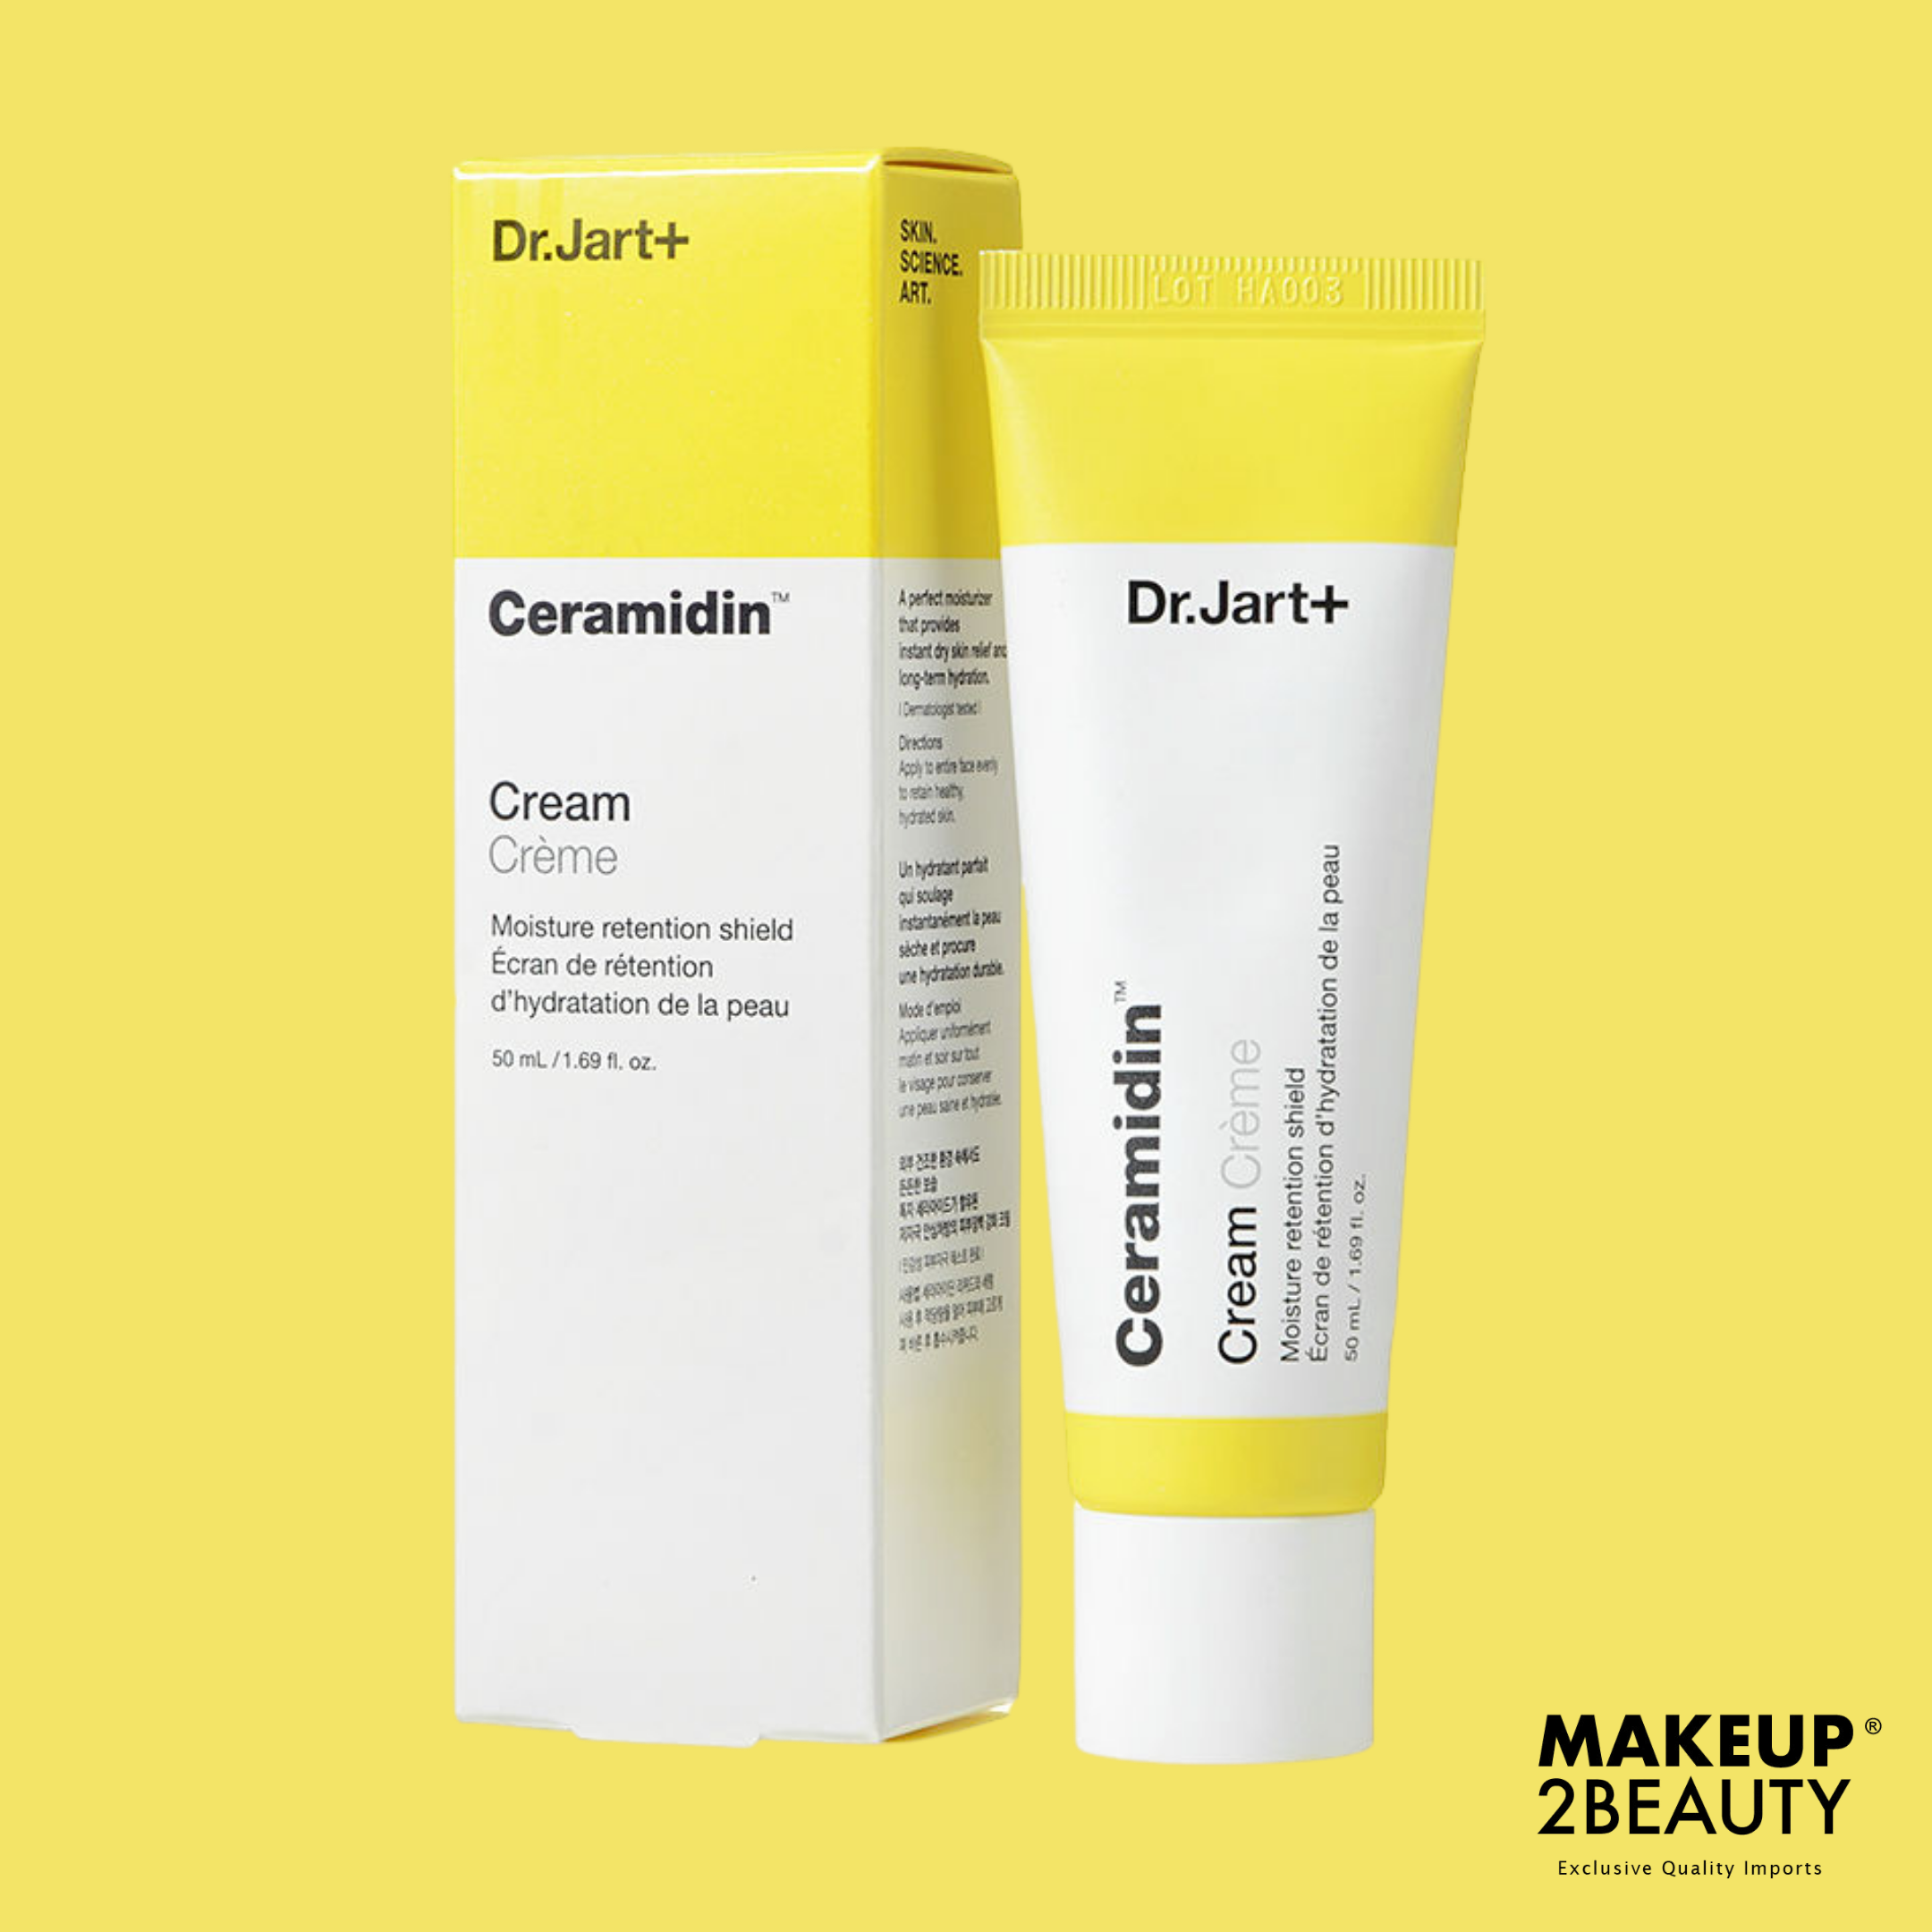 Dr Jart+ Ceramidin Cream Review For Dry, Irritated, Rosacea-Prone Skin